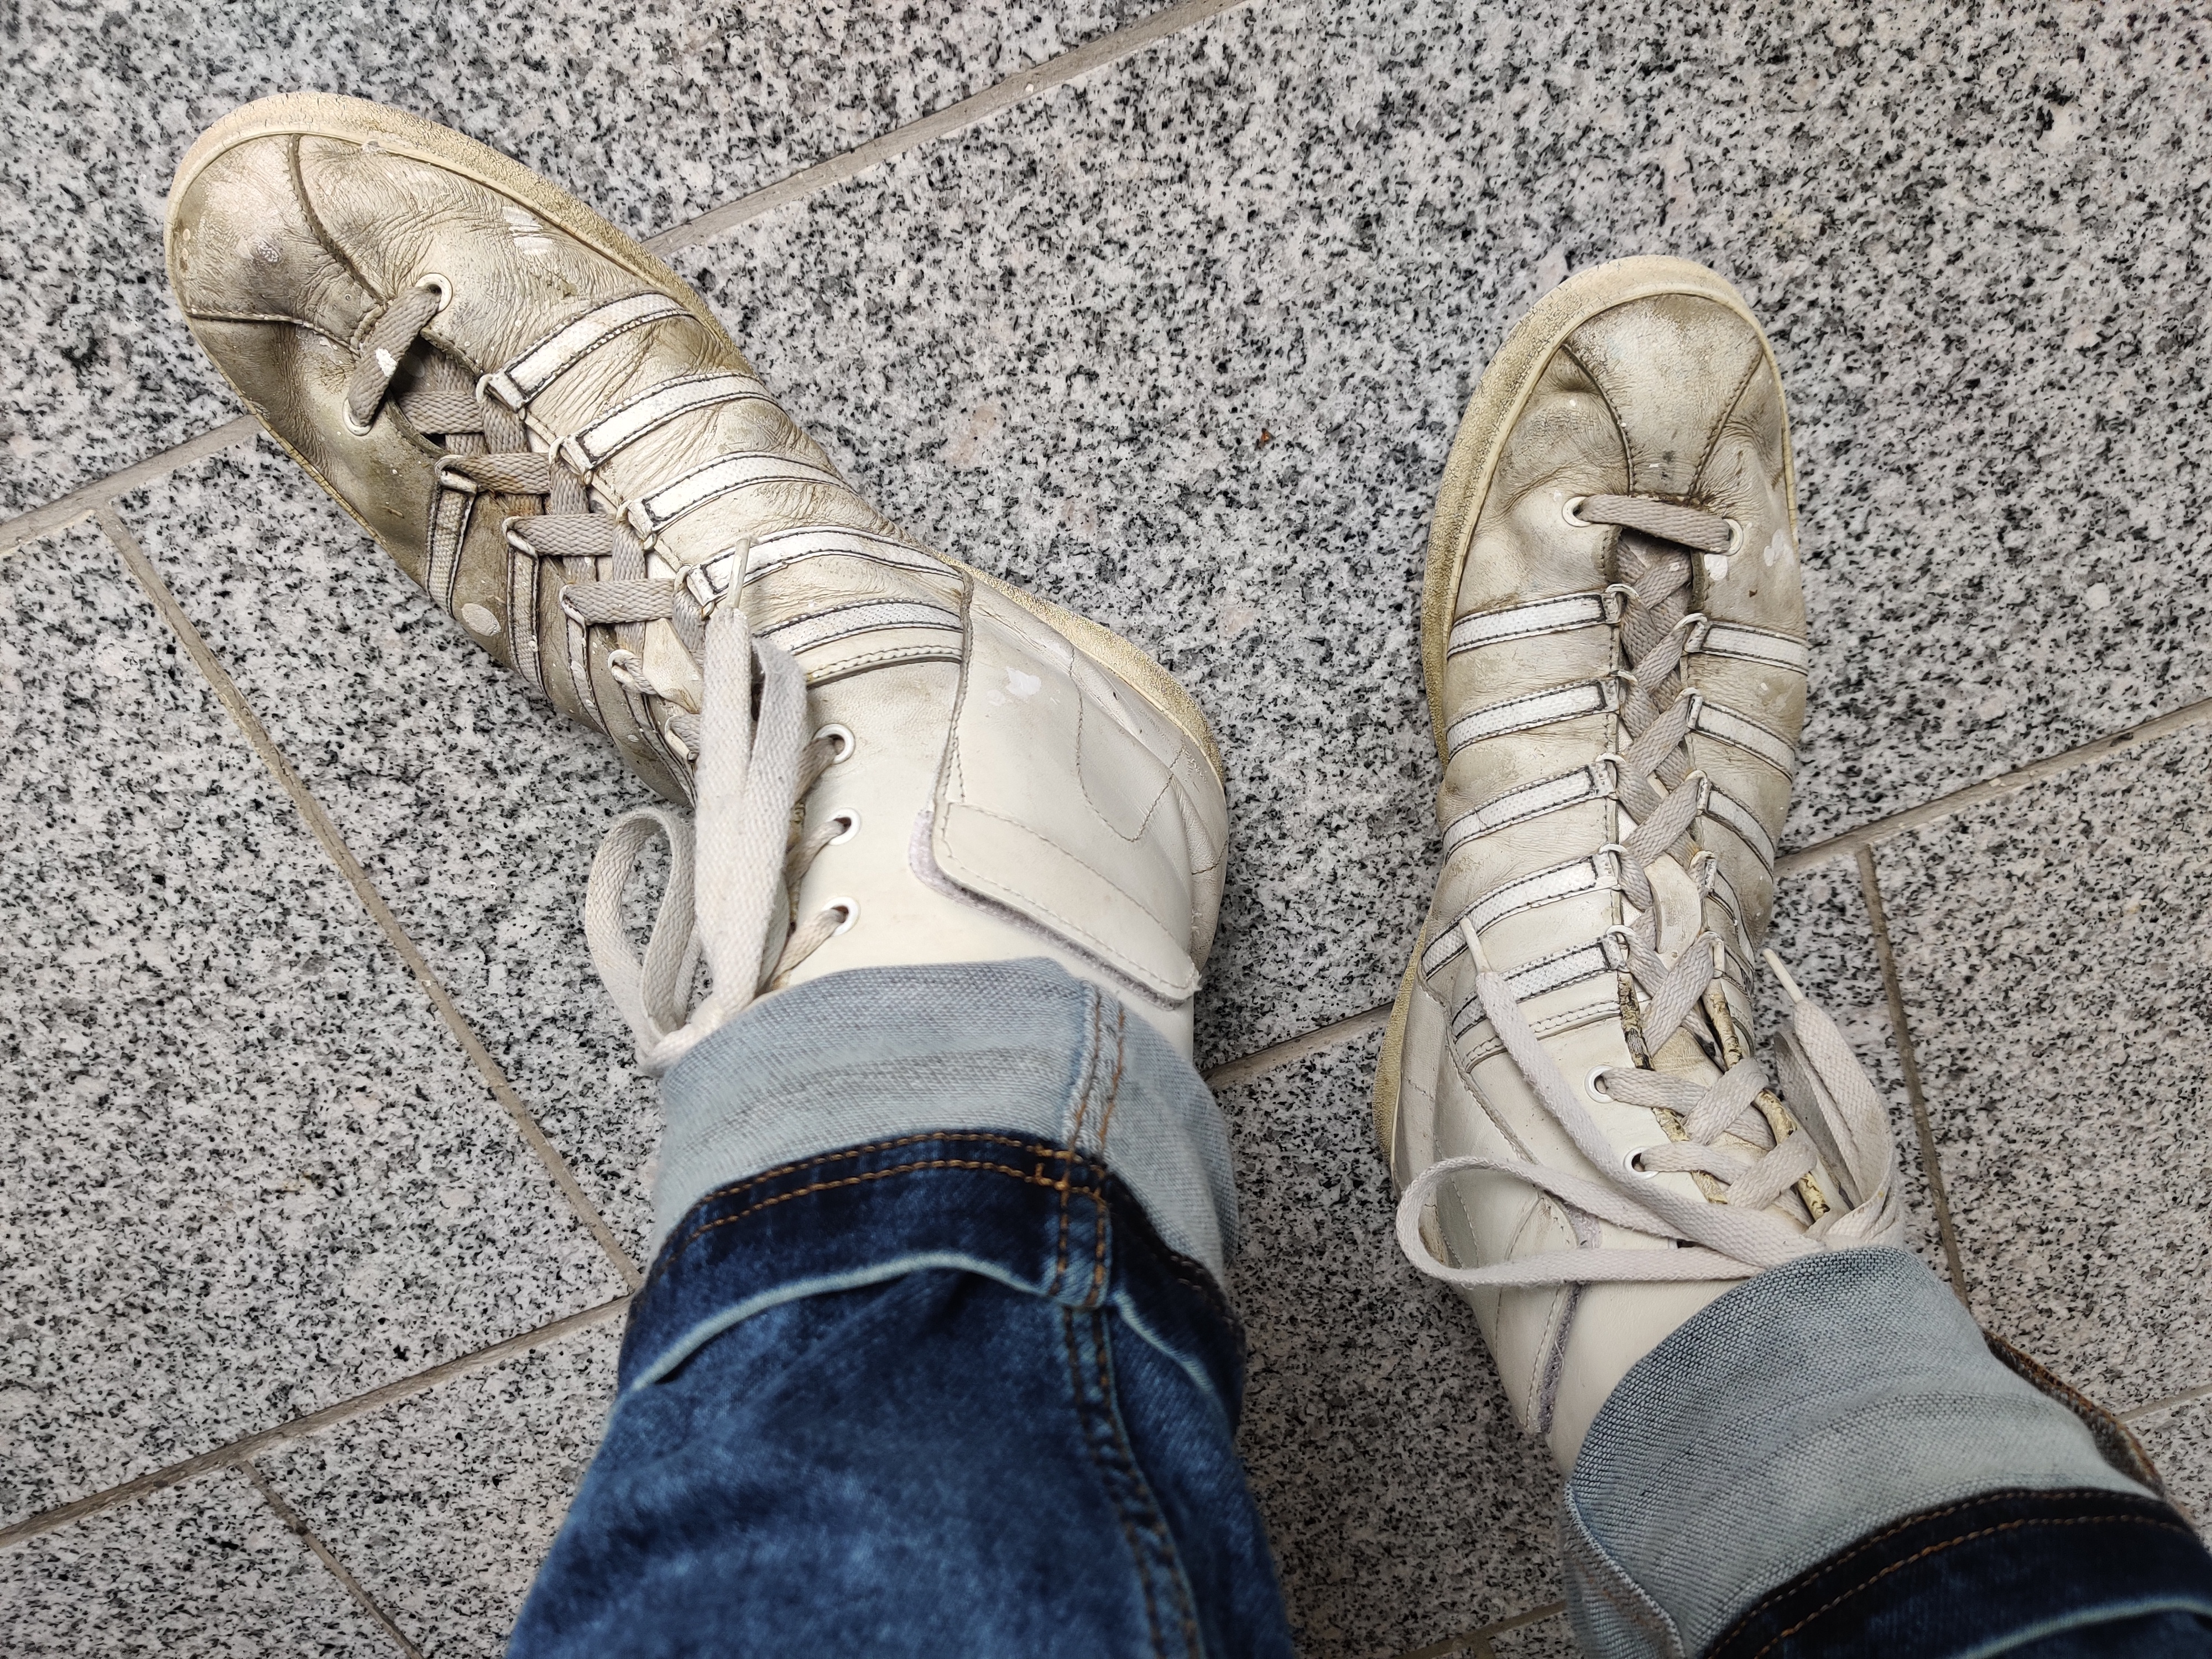 In my vintage Künzli sneaker boots